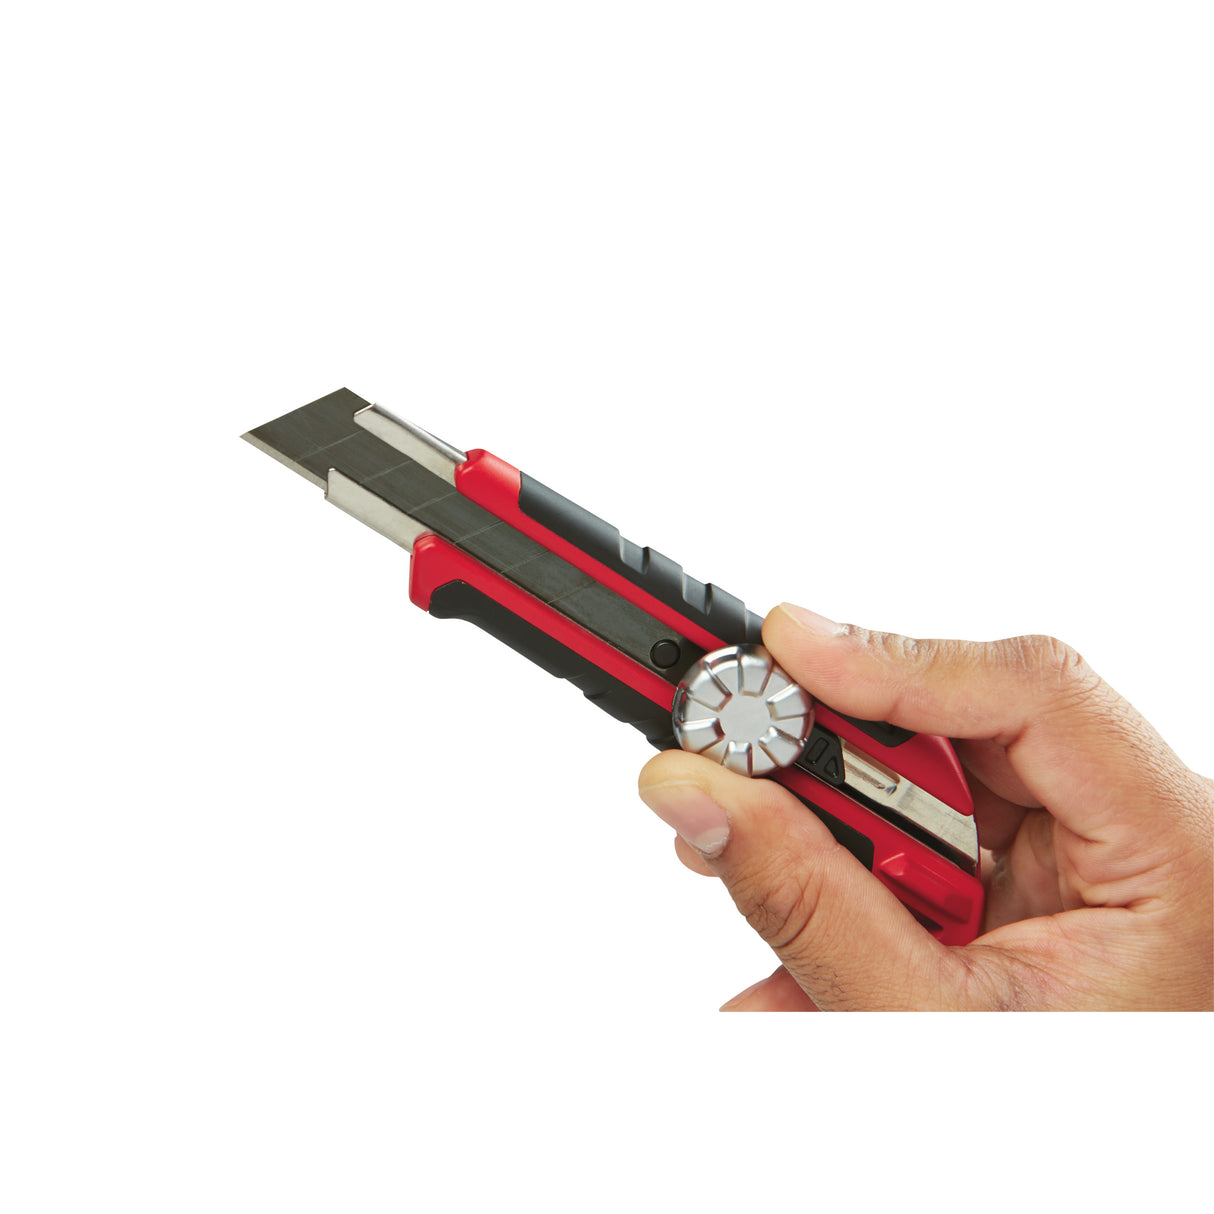 Milwaukee Cuttermesser 48221961 roteswerkzeug